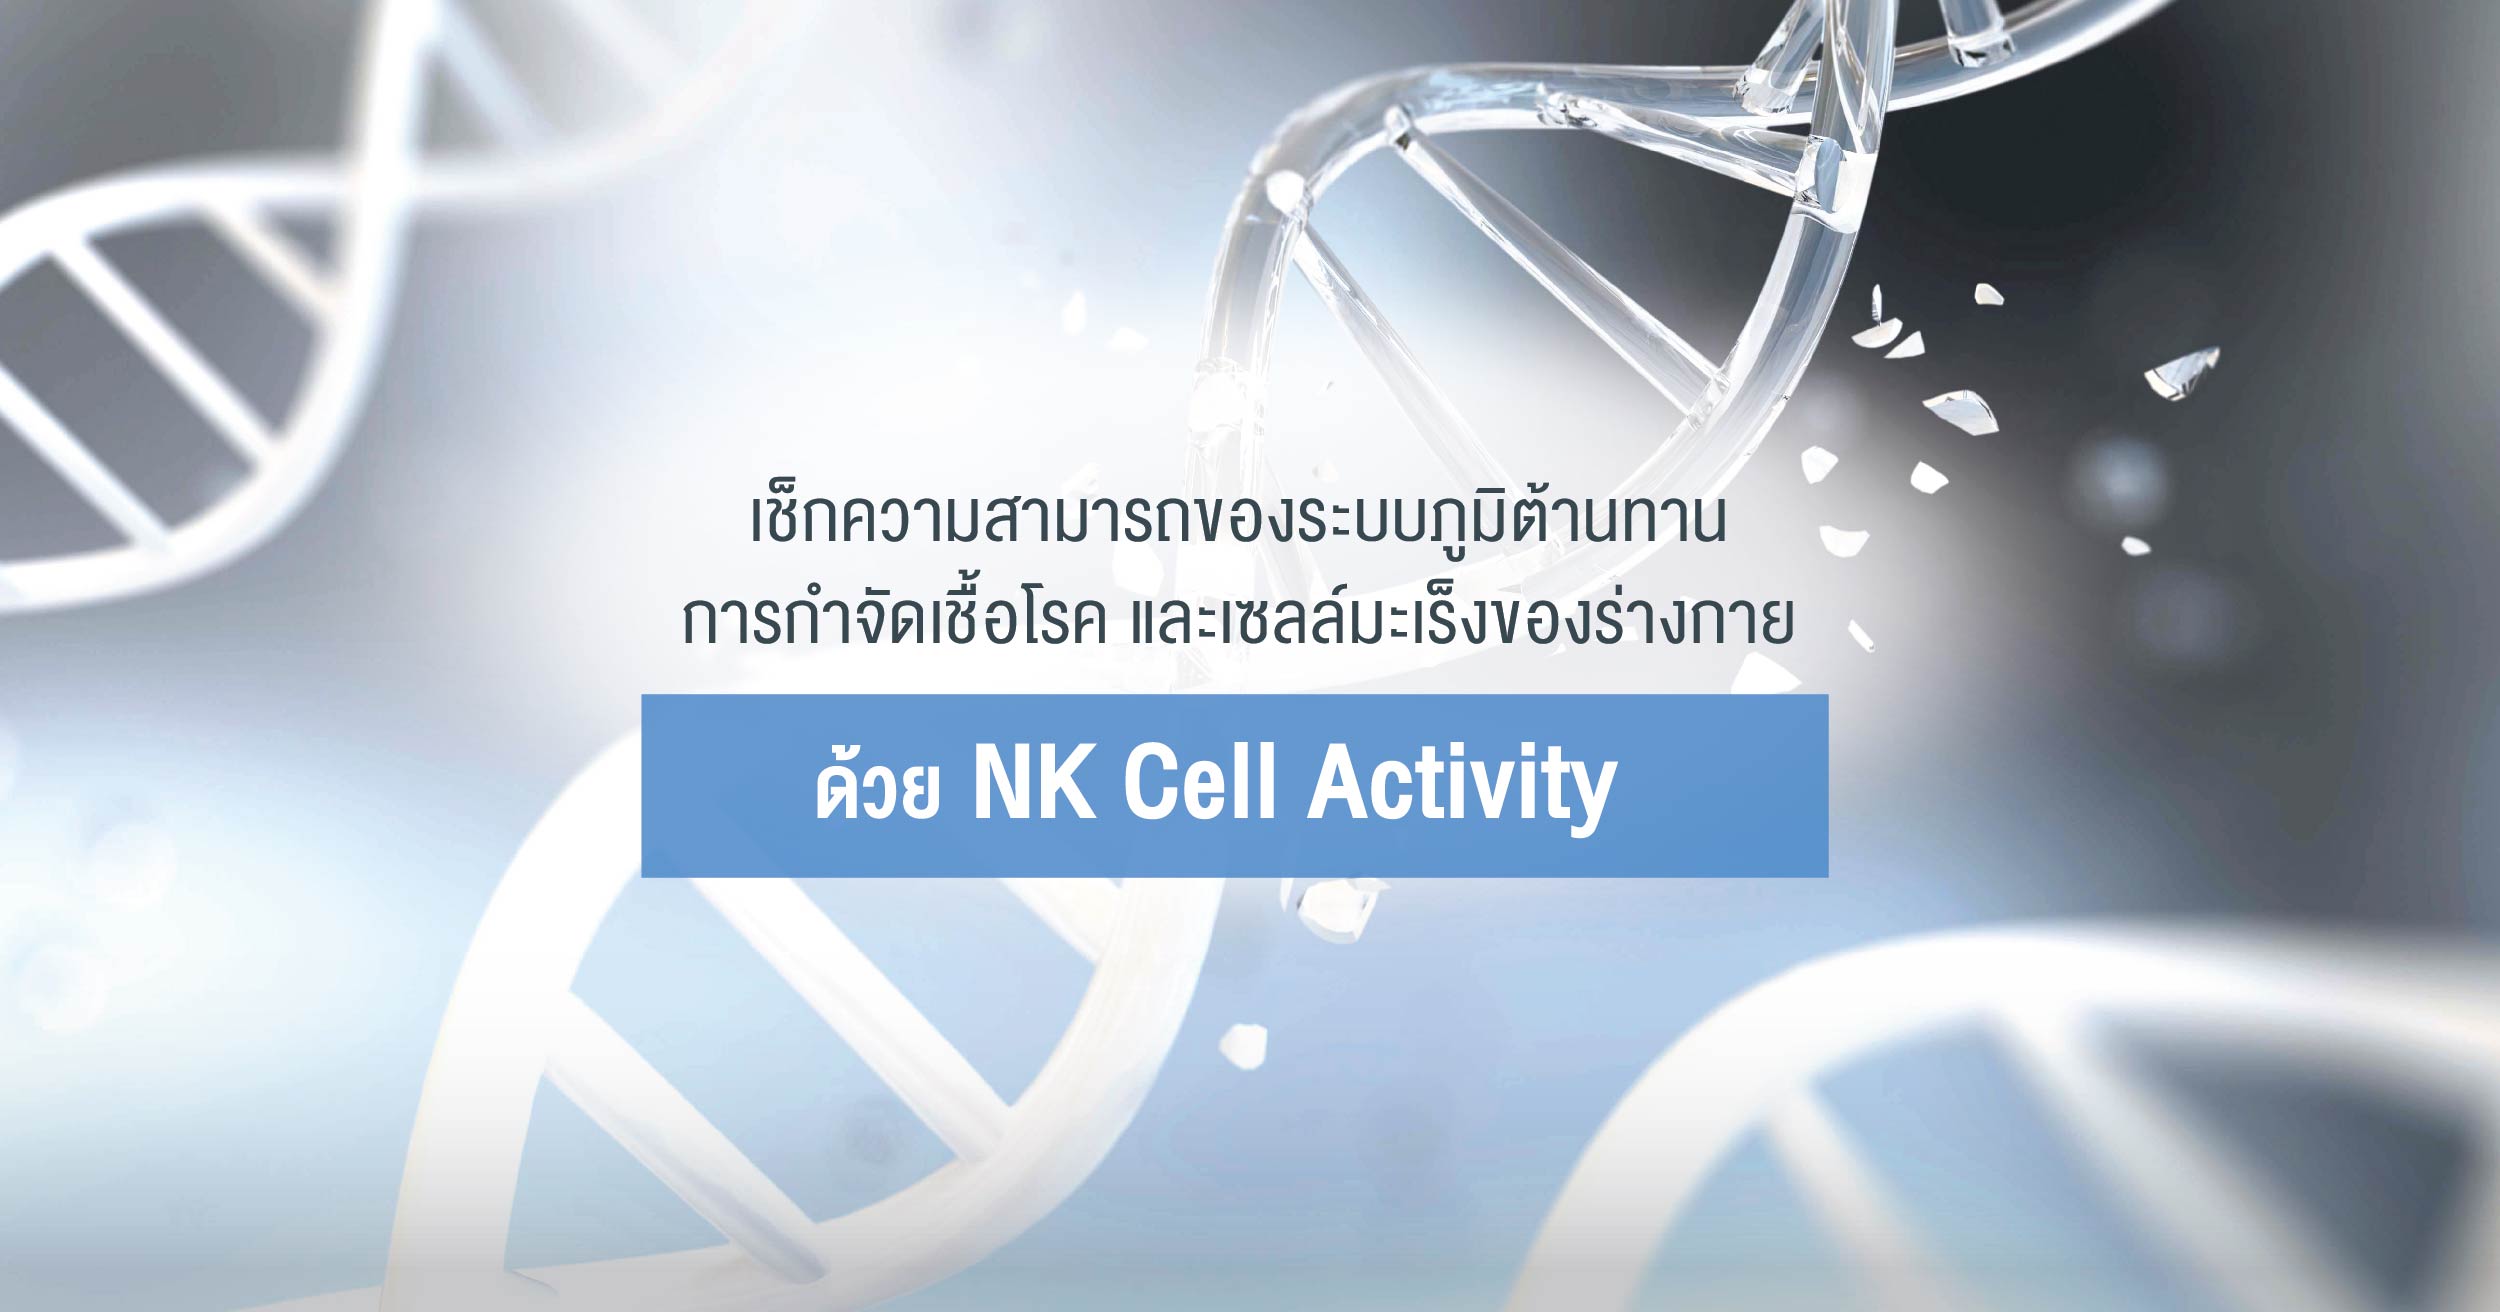 Natural Killer Cells Activity